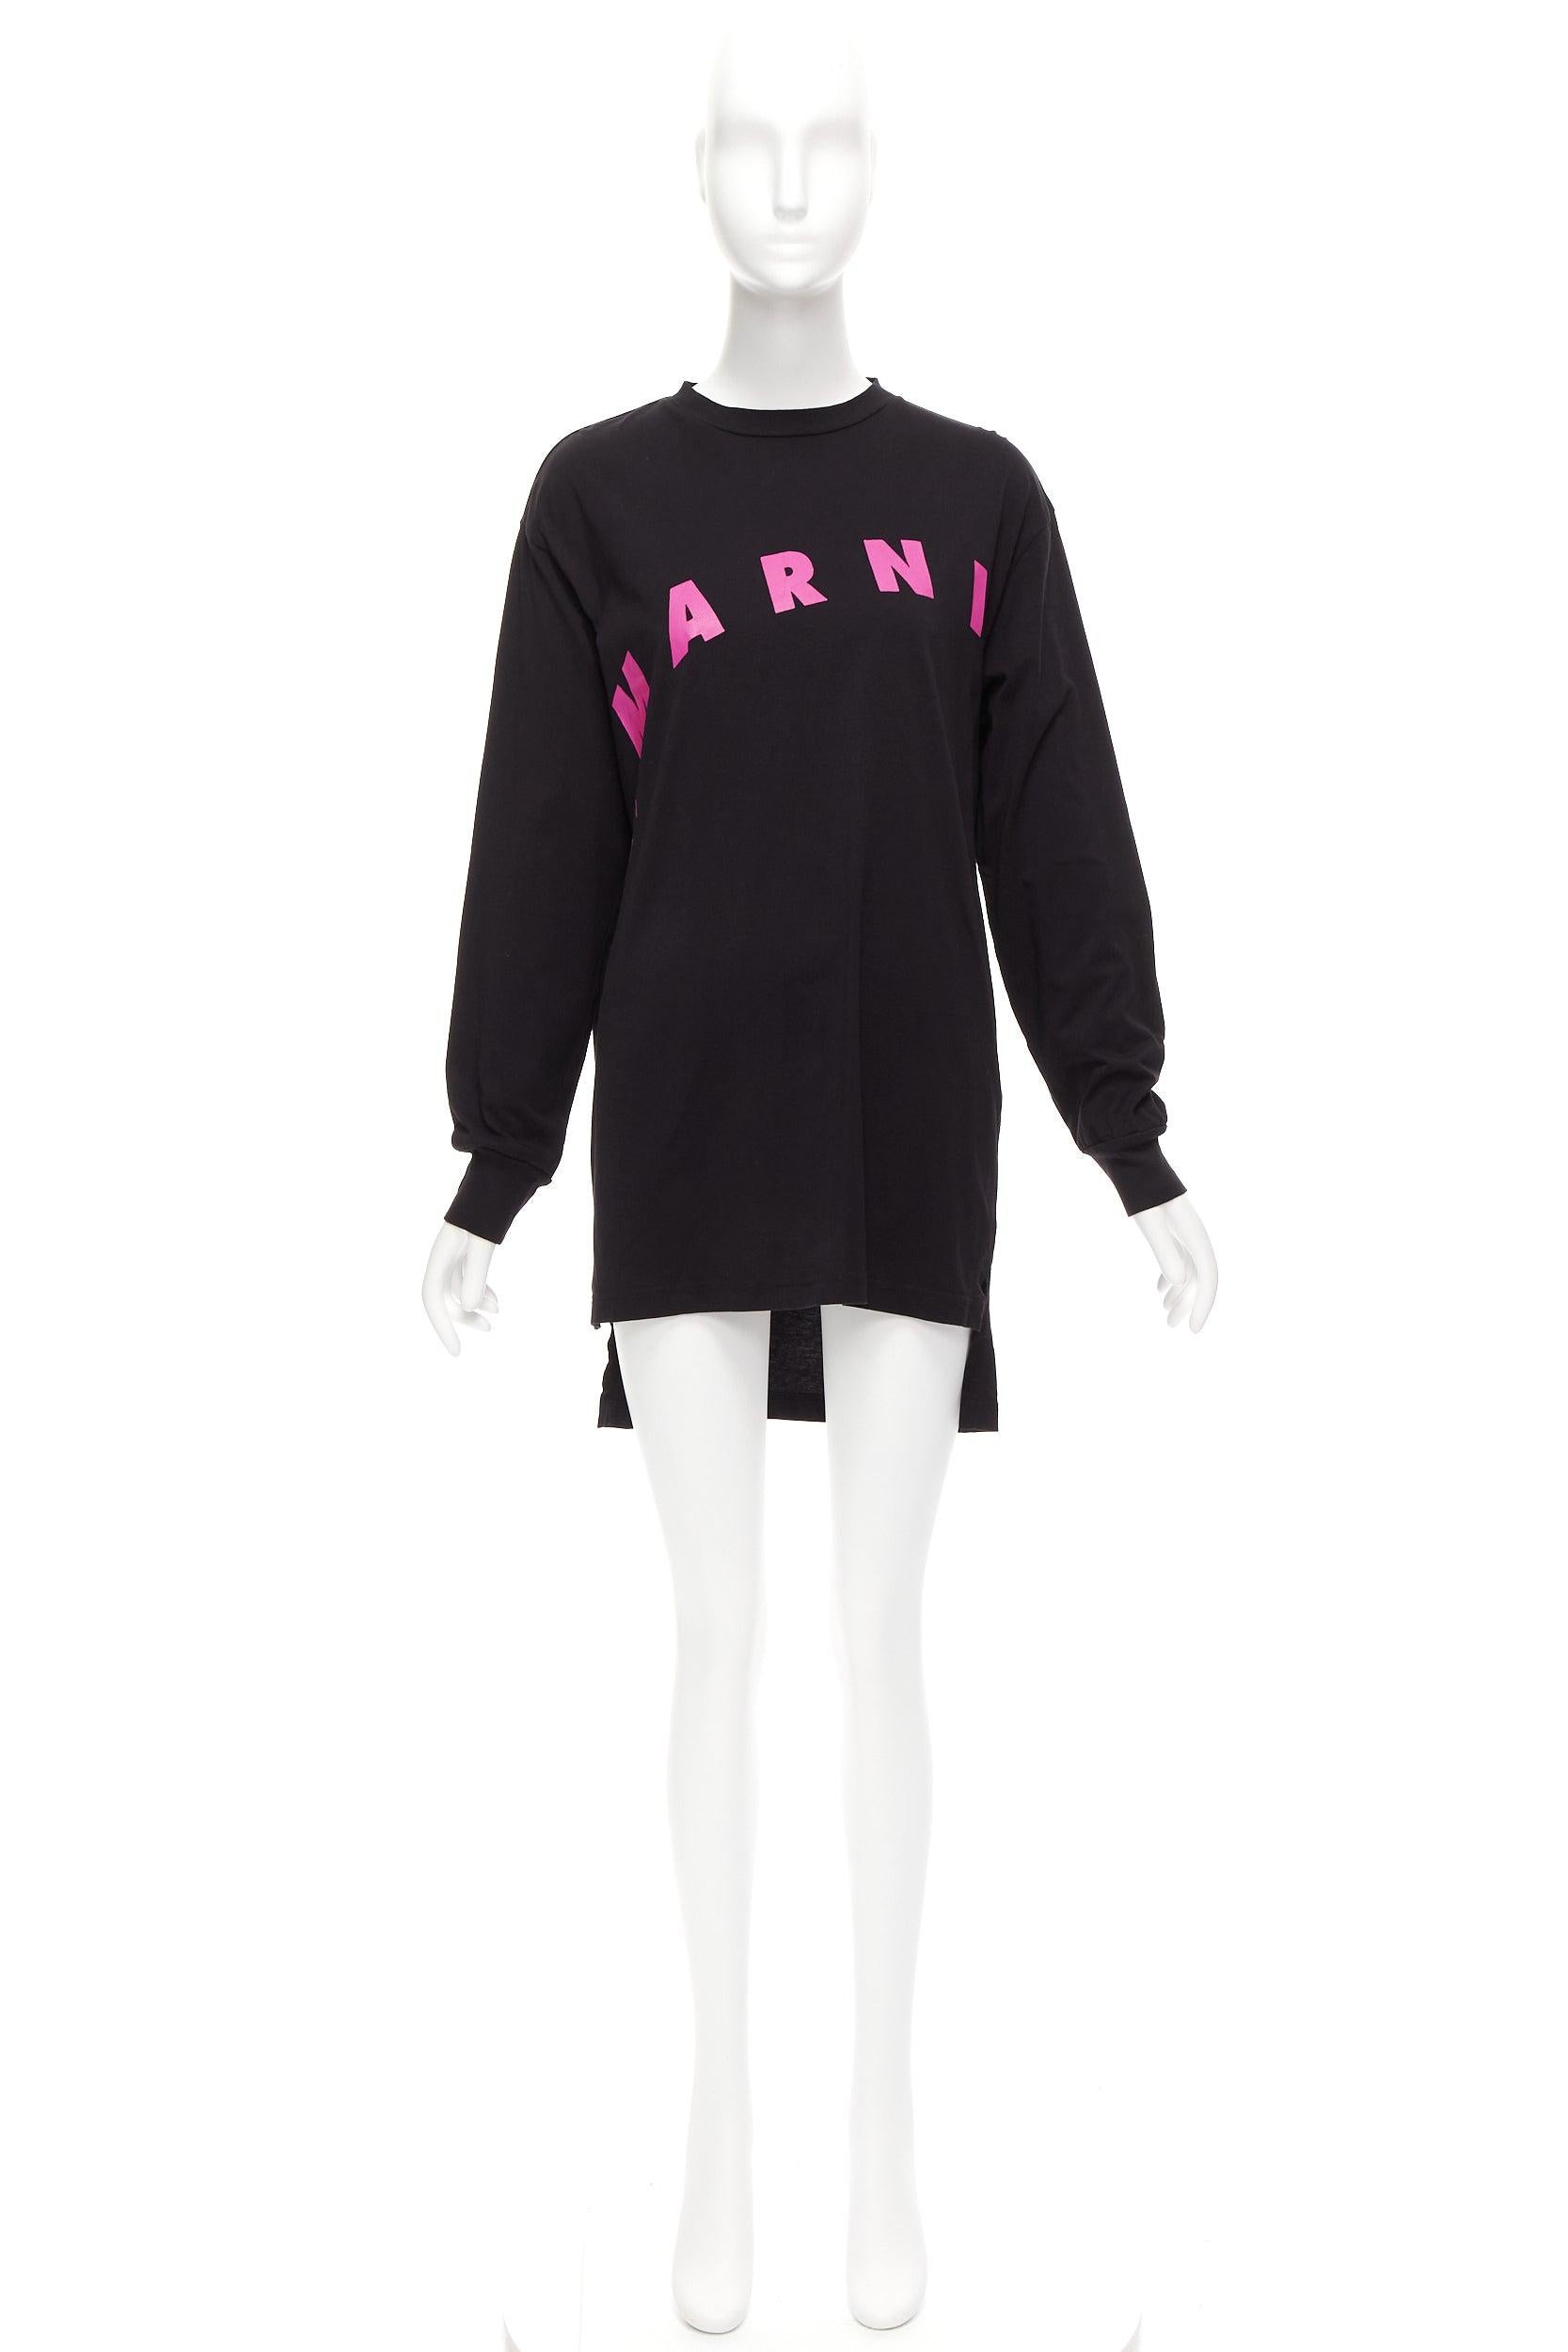 MARNI black pink logo print long sleeve crew neck sweater dress IT38 XS For Sale 4